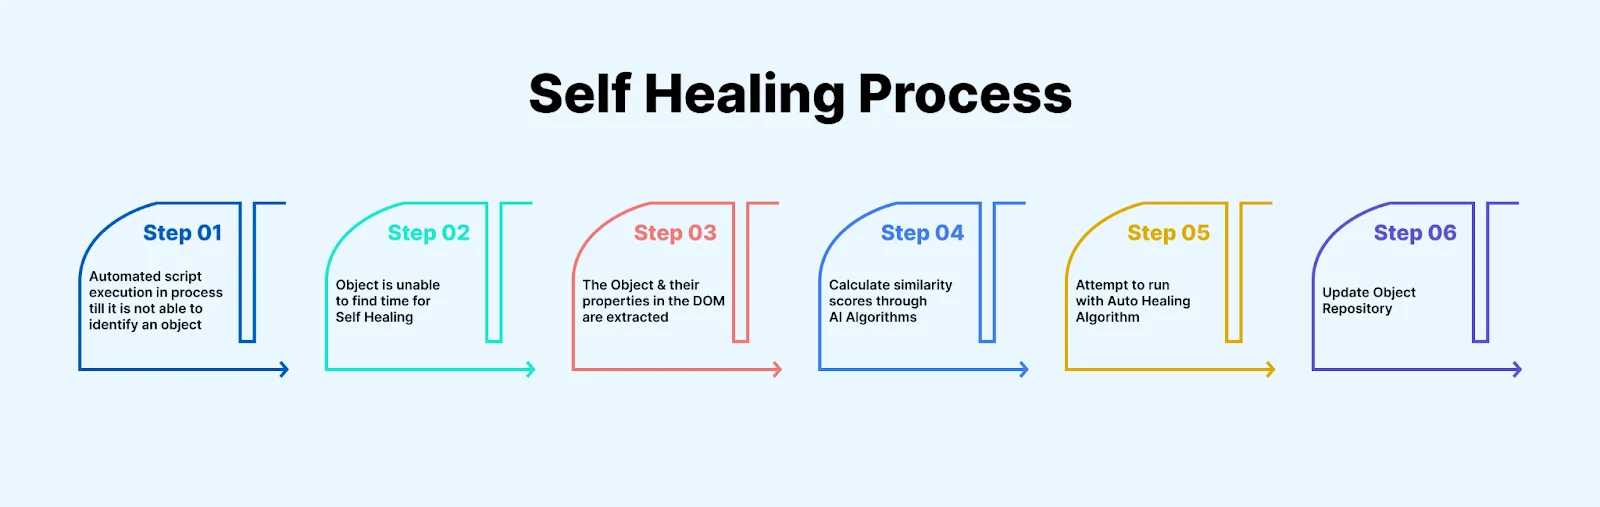 Self-Healing Process